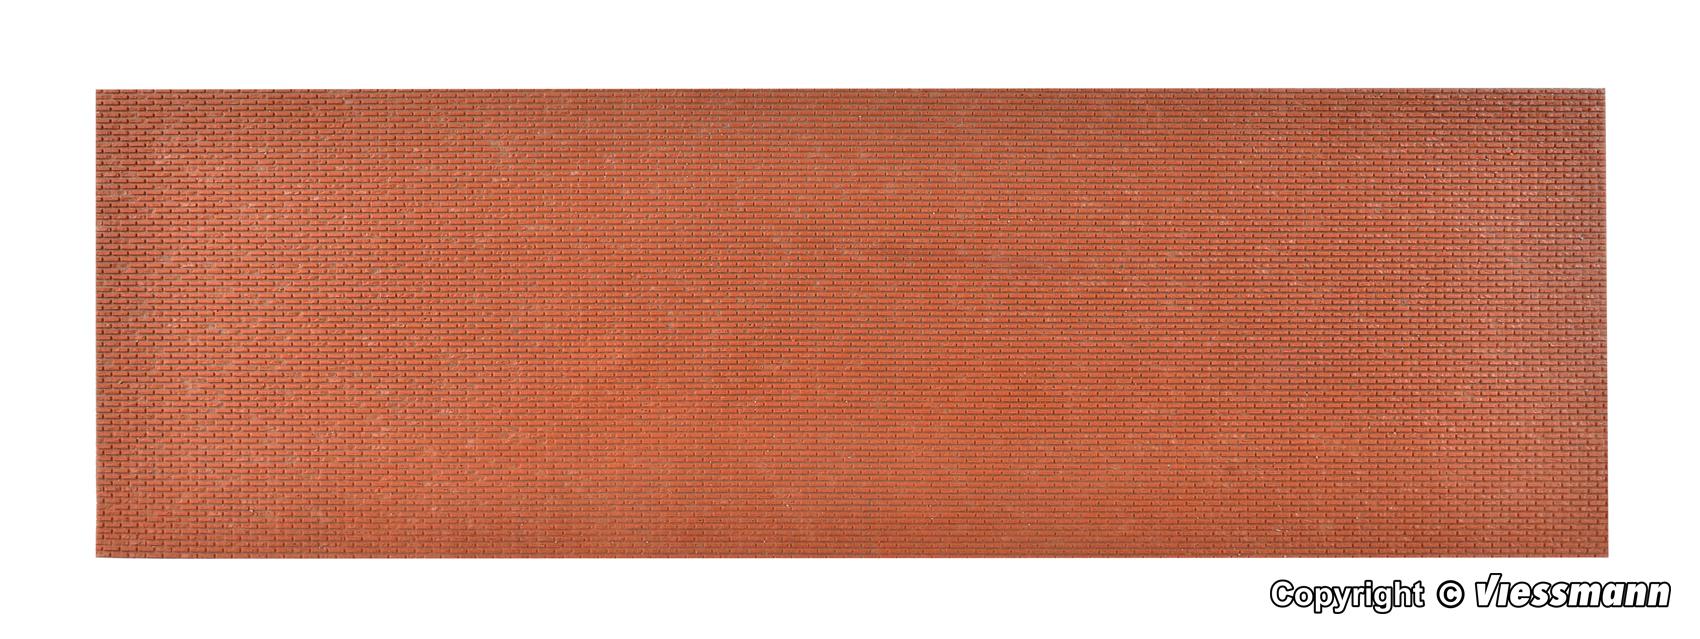 Vollmer 48722 Red brick wall sheet